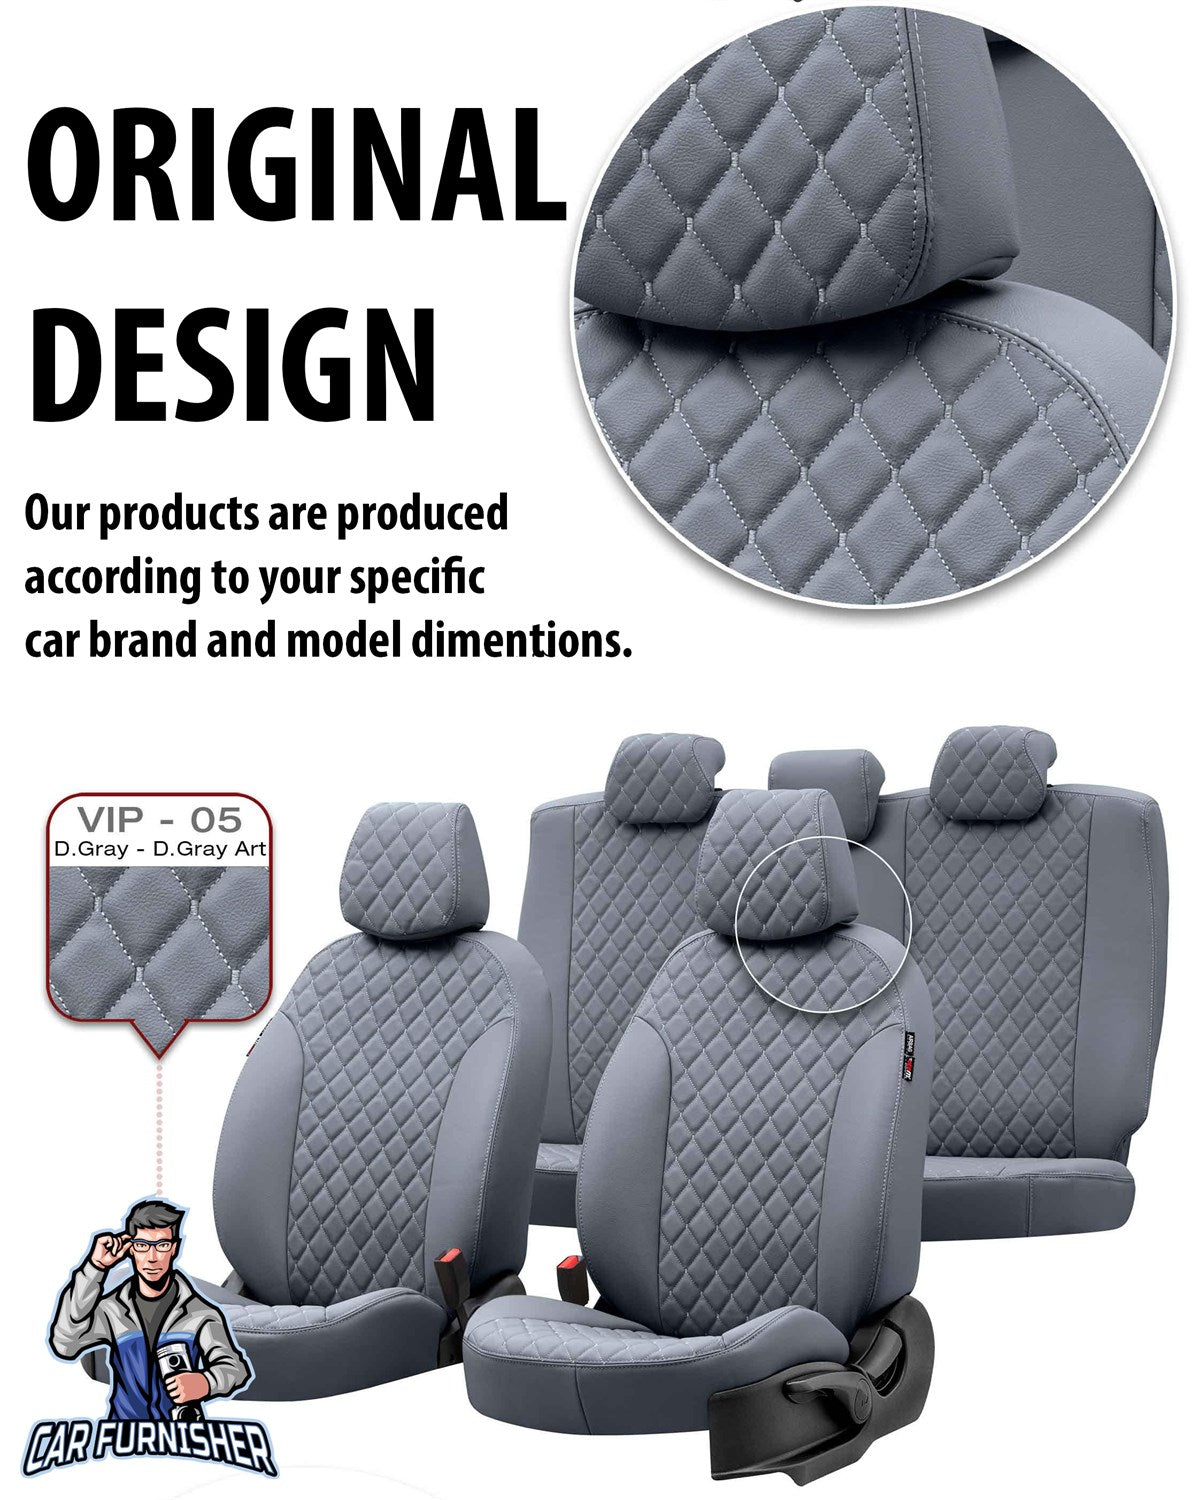 Chevrolet Captiva Seat Cover Madrid Leather Design Blue Leather